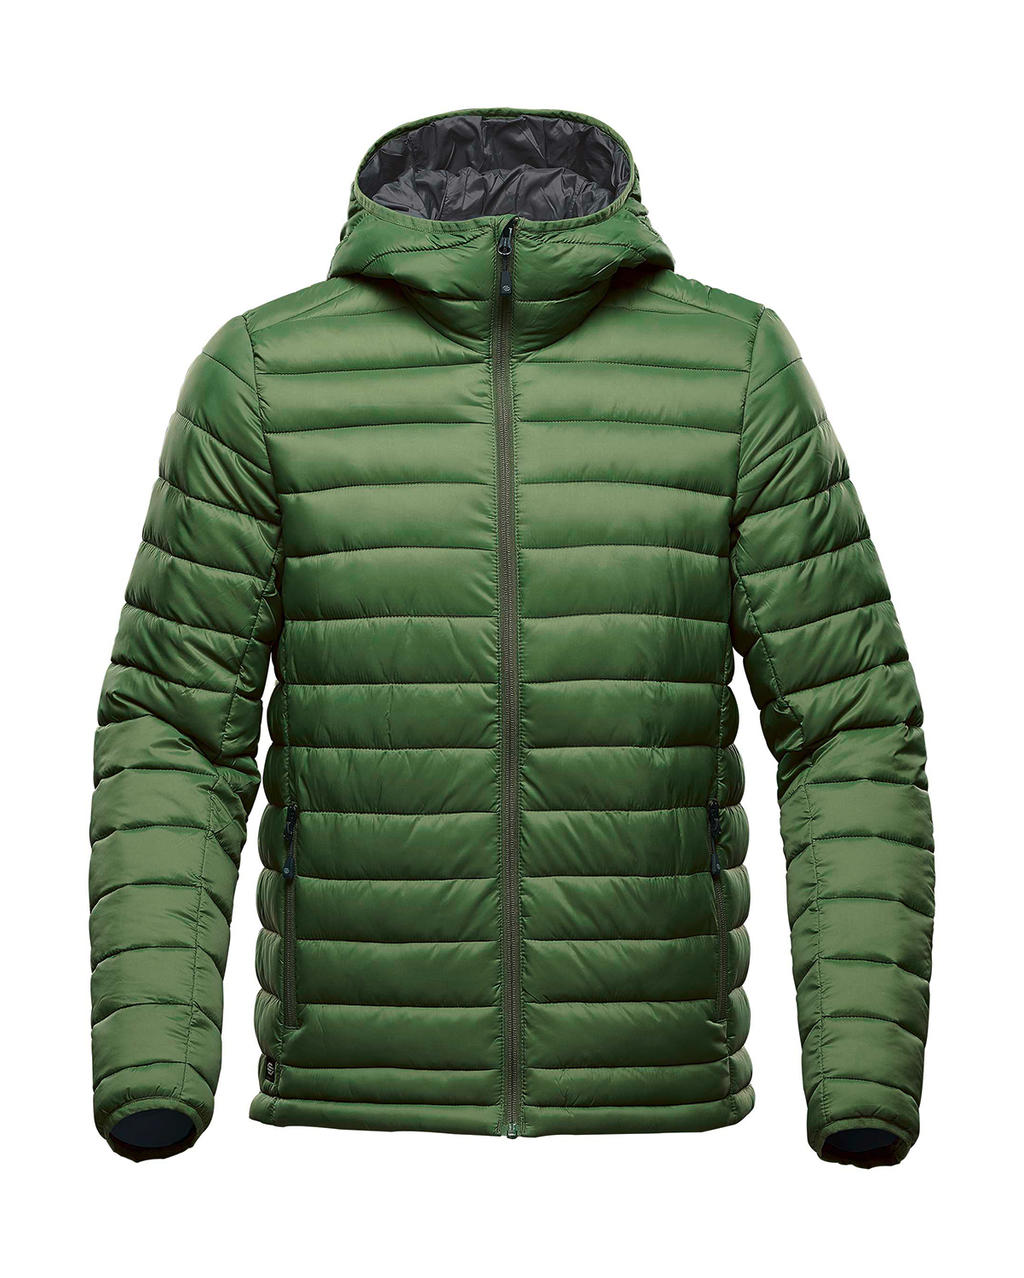  Mens Stavanger Thermal Jacket in Farbe Garden Green/Graphite